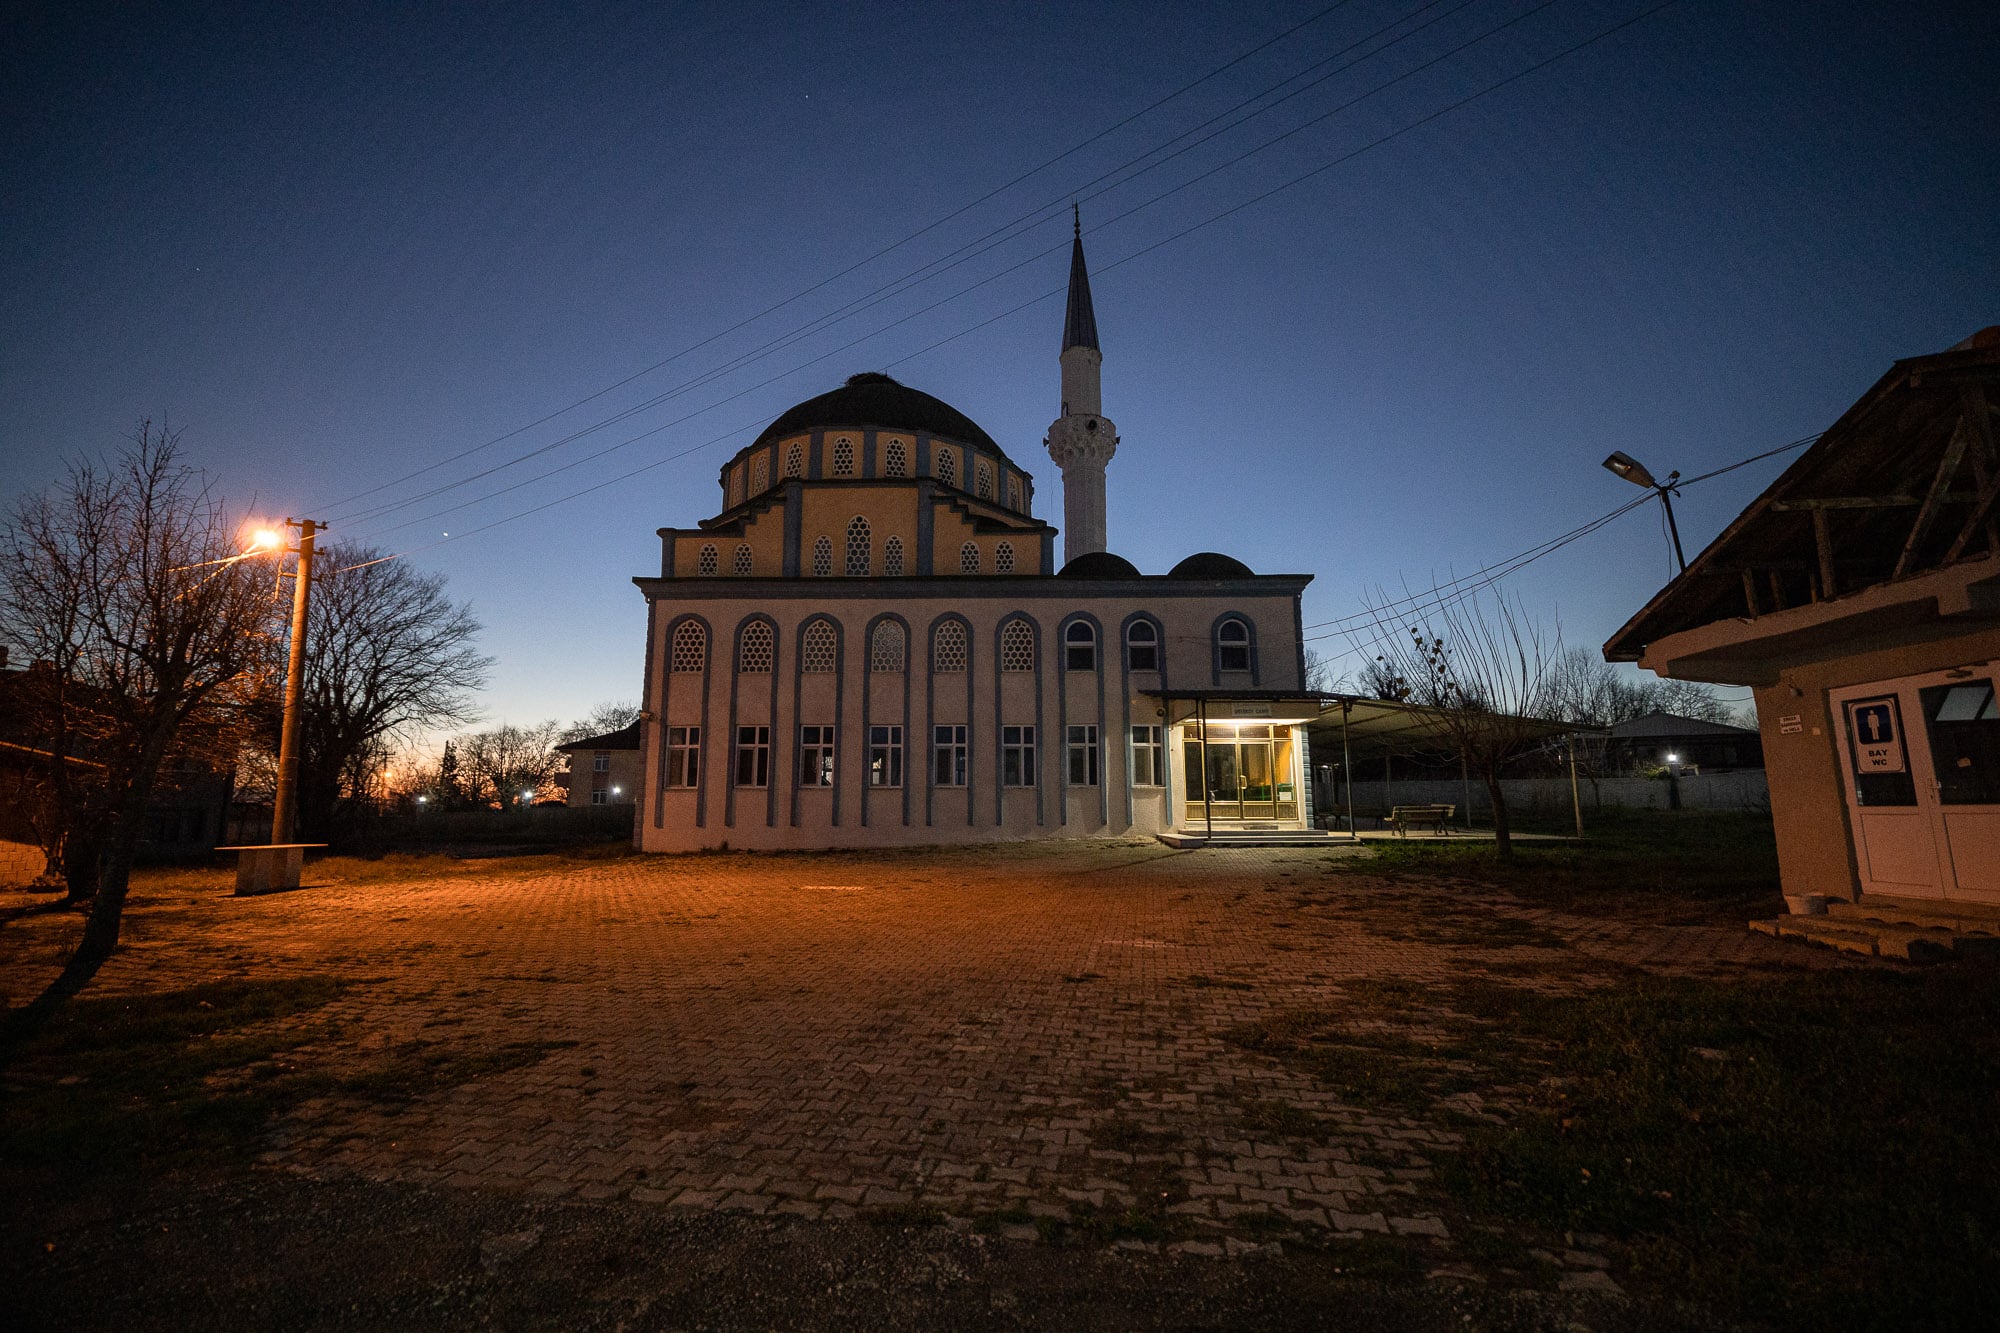 Ortaköy mosque